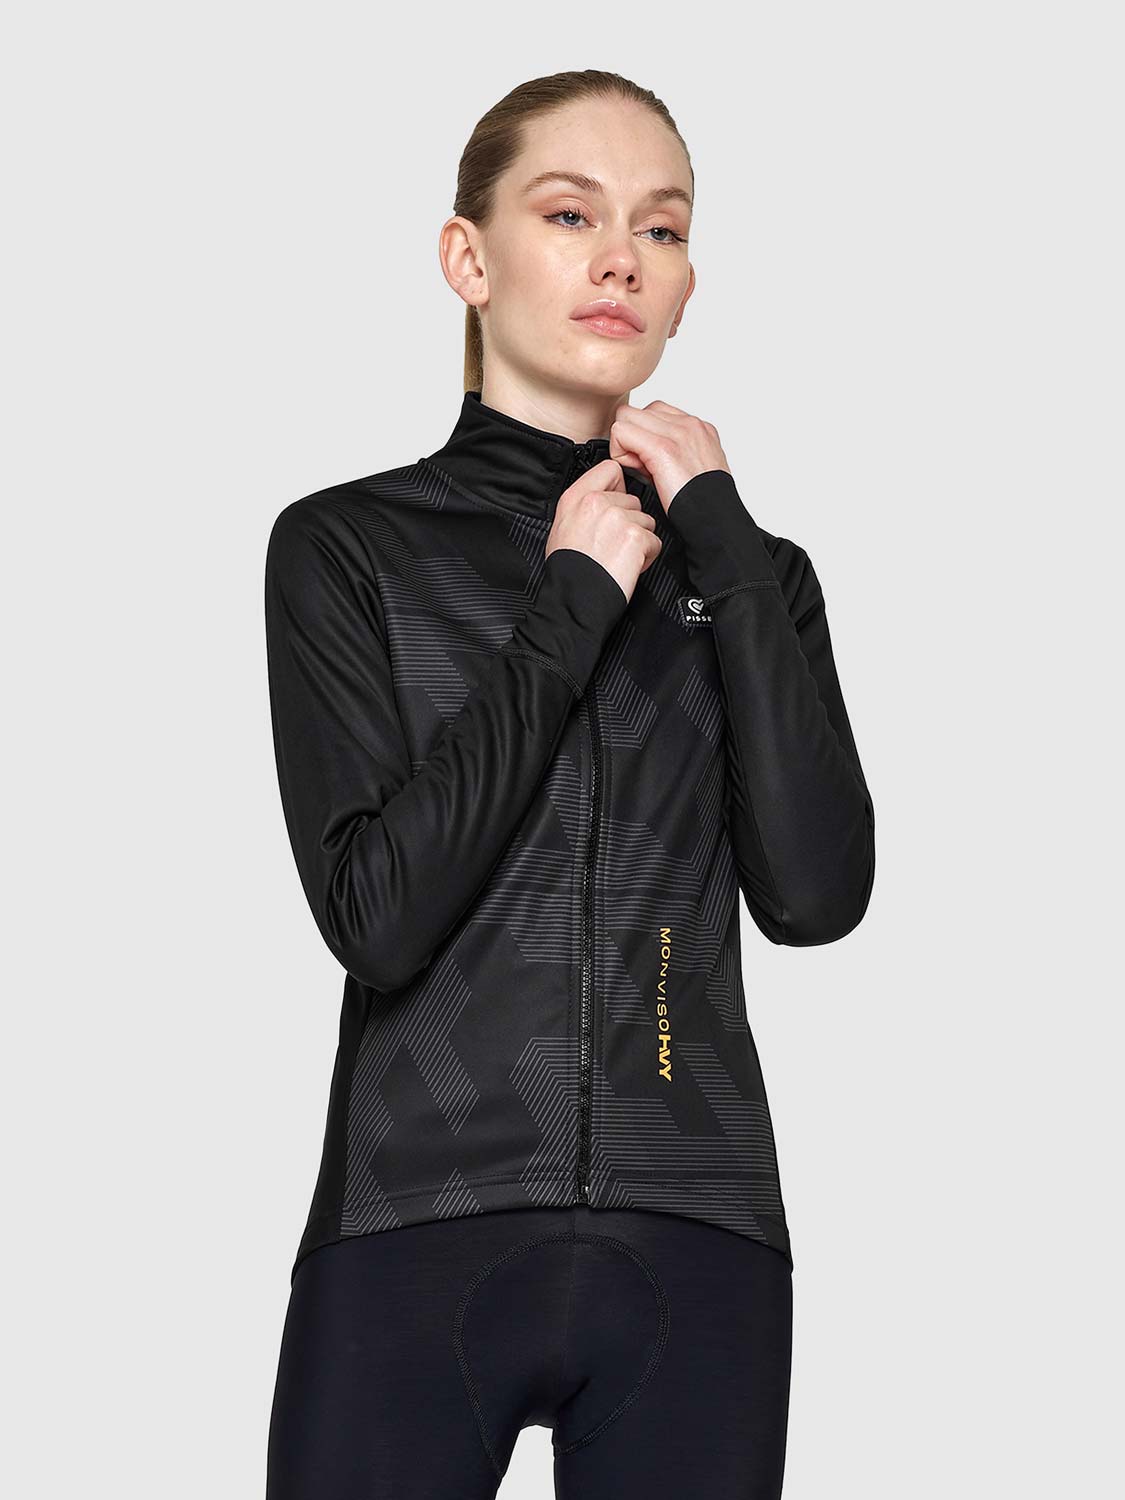 Coats & Jackets for Women | Costco